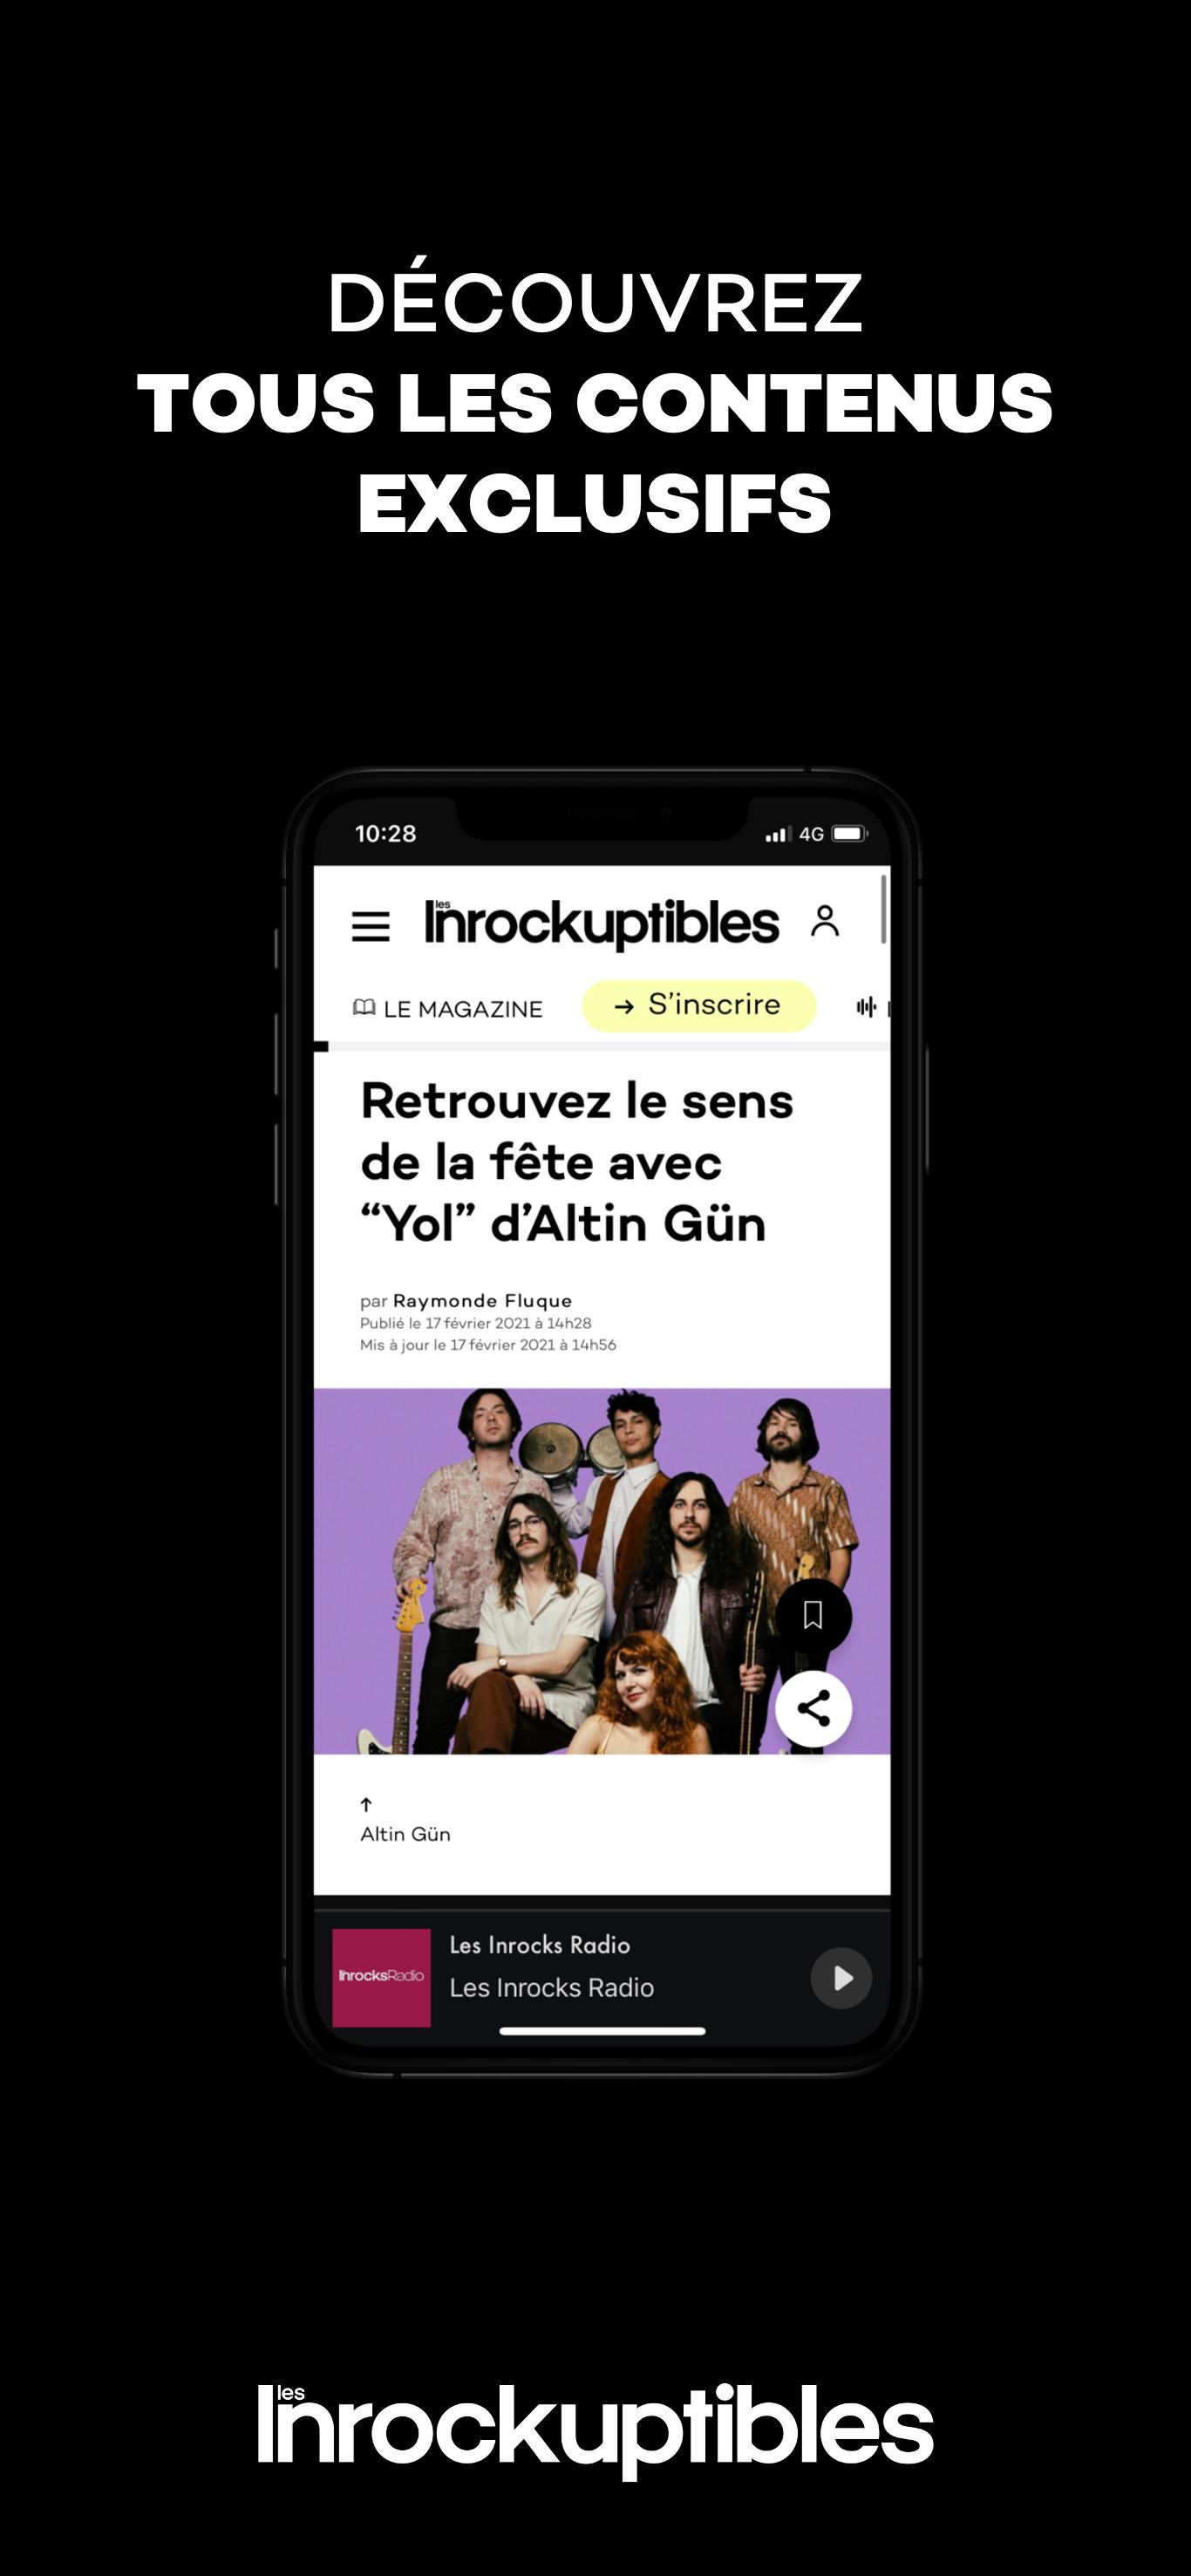 Les Inrockuptibles - playlists, articles et vidéos 6.4.3 Screenshot 13